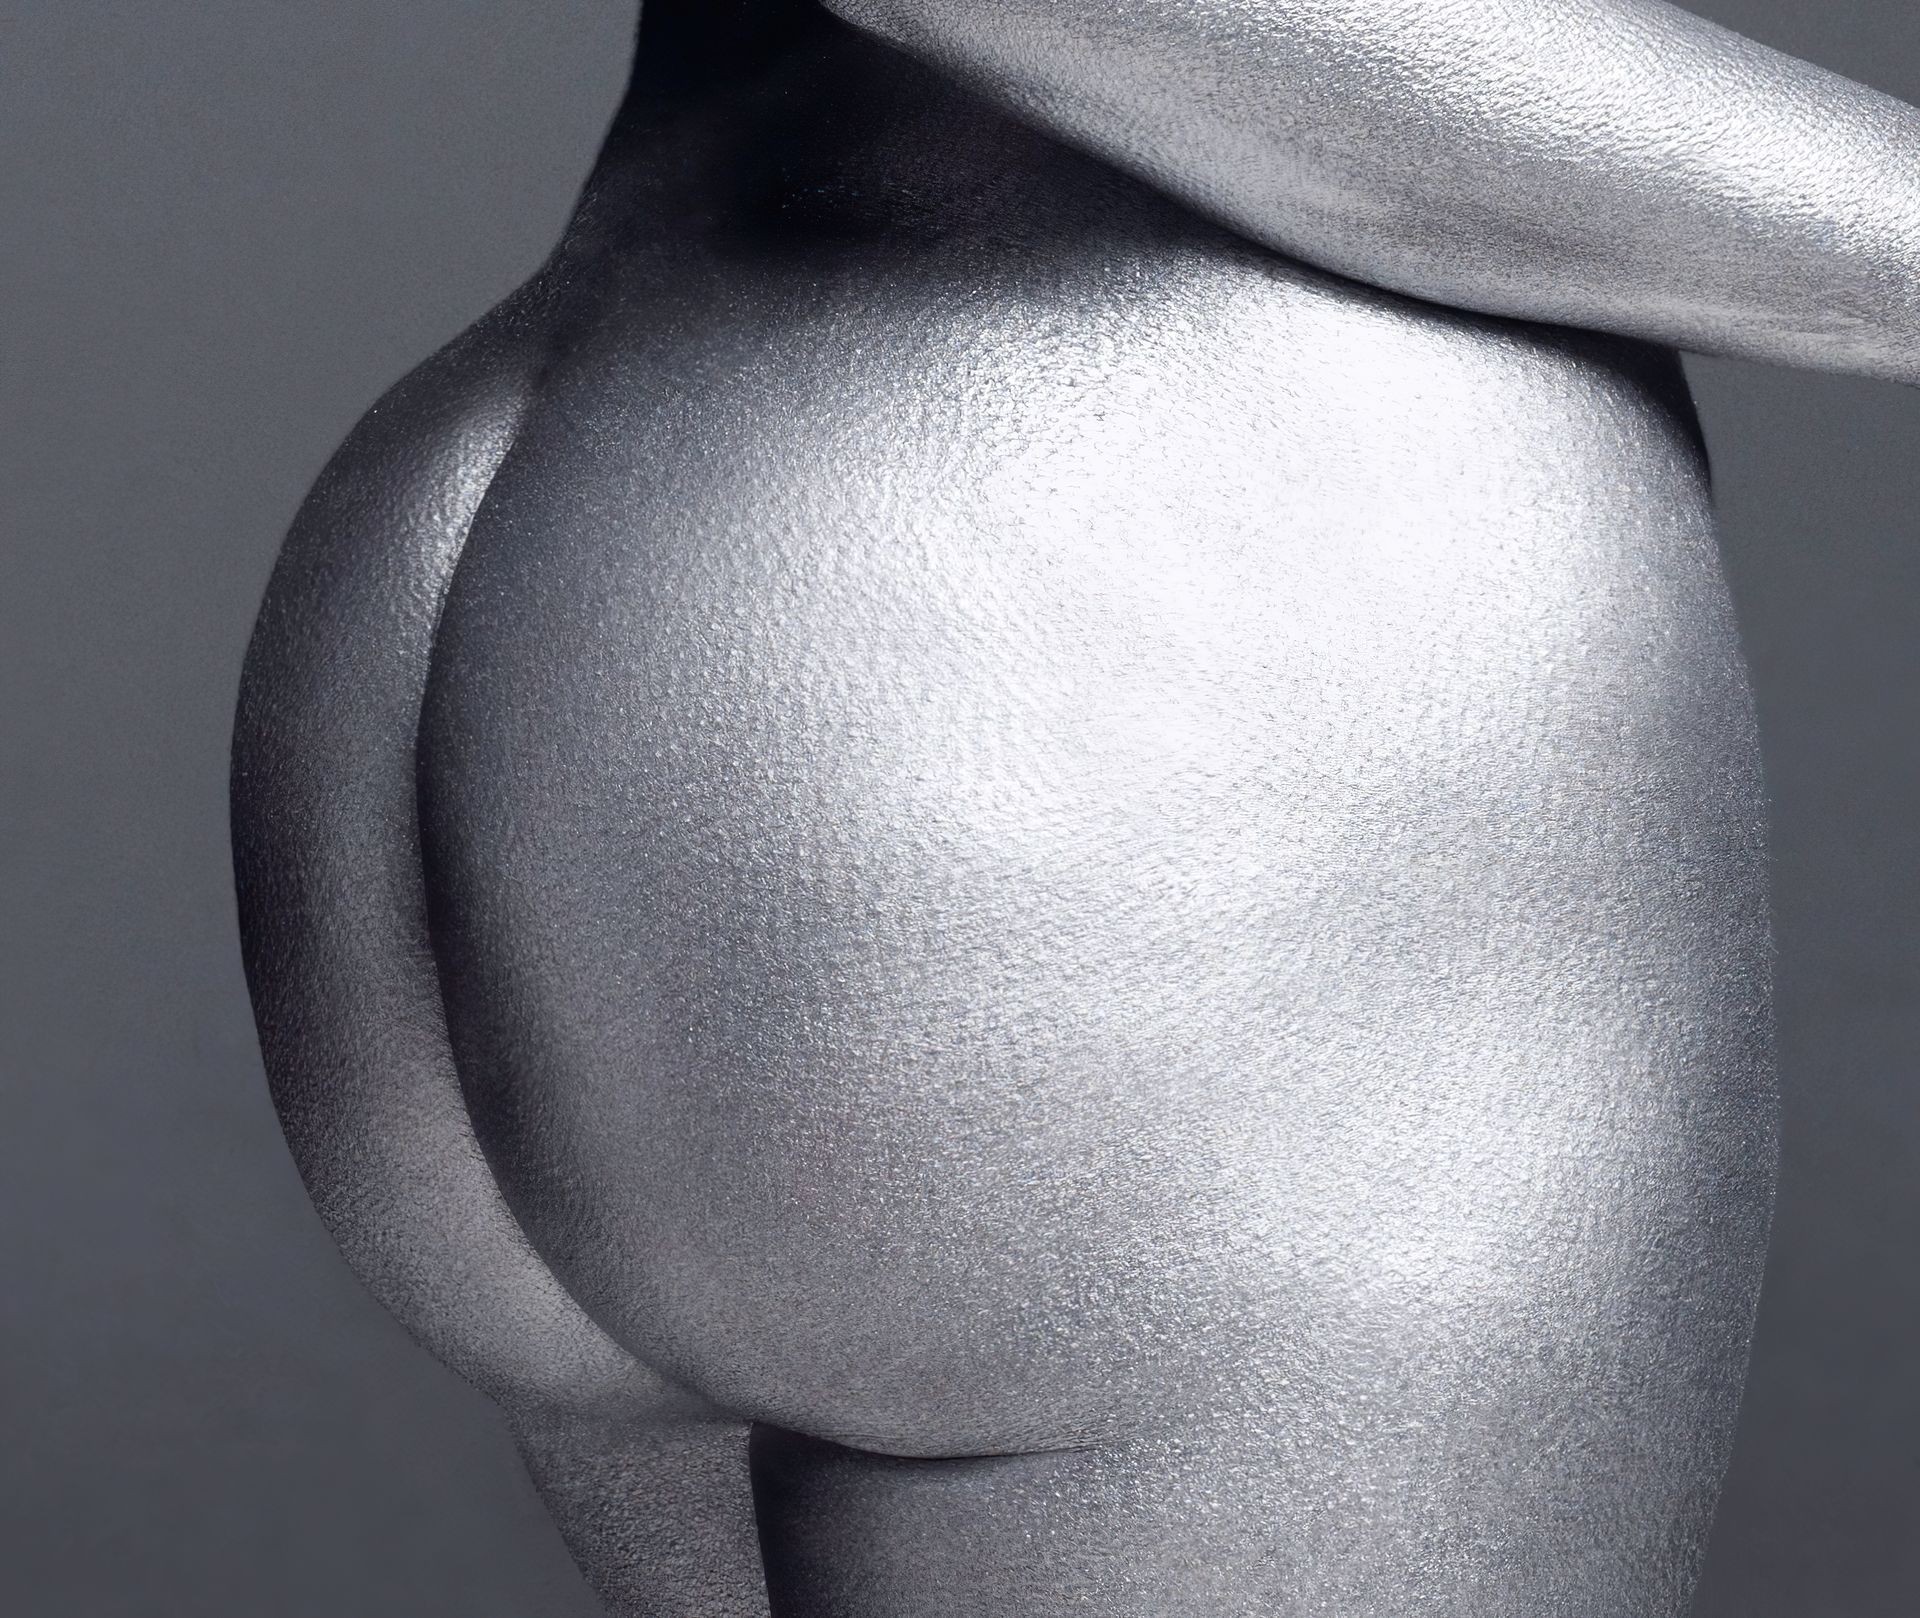 Kim Kardashian West Nude (19 Photos)